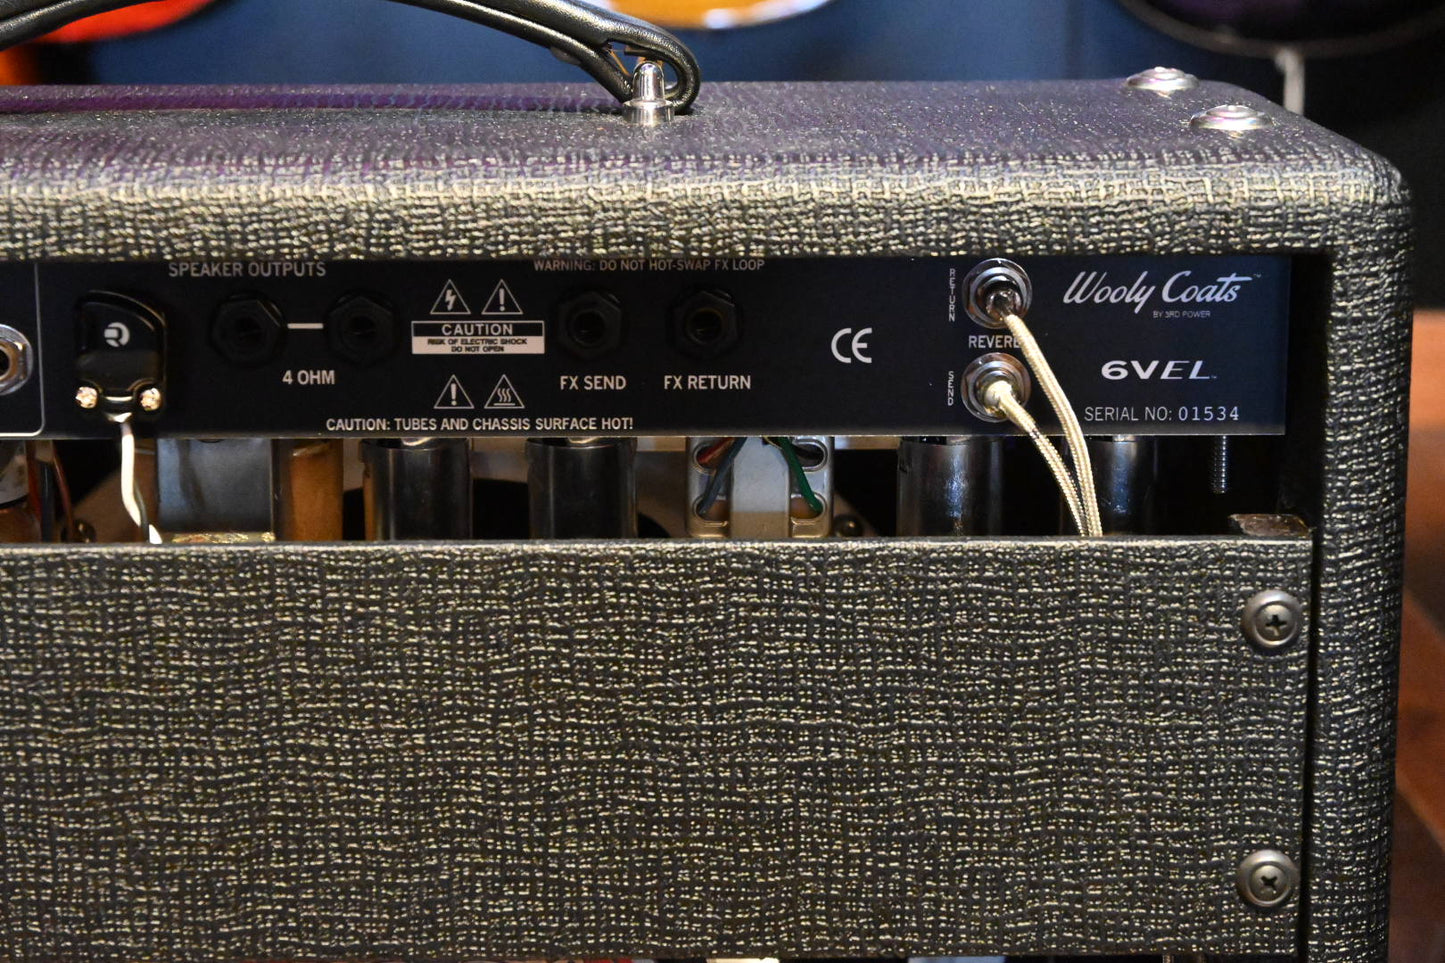 3rd Power Wooly Coats Extra Spanky 6VEL - Vox Hiwatt Tolex/Beige Wheat Grill Guitar Amp #1534 - Danville Music